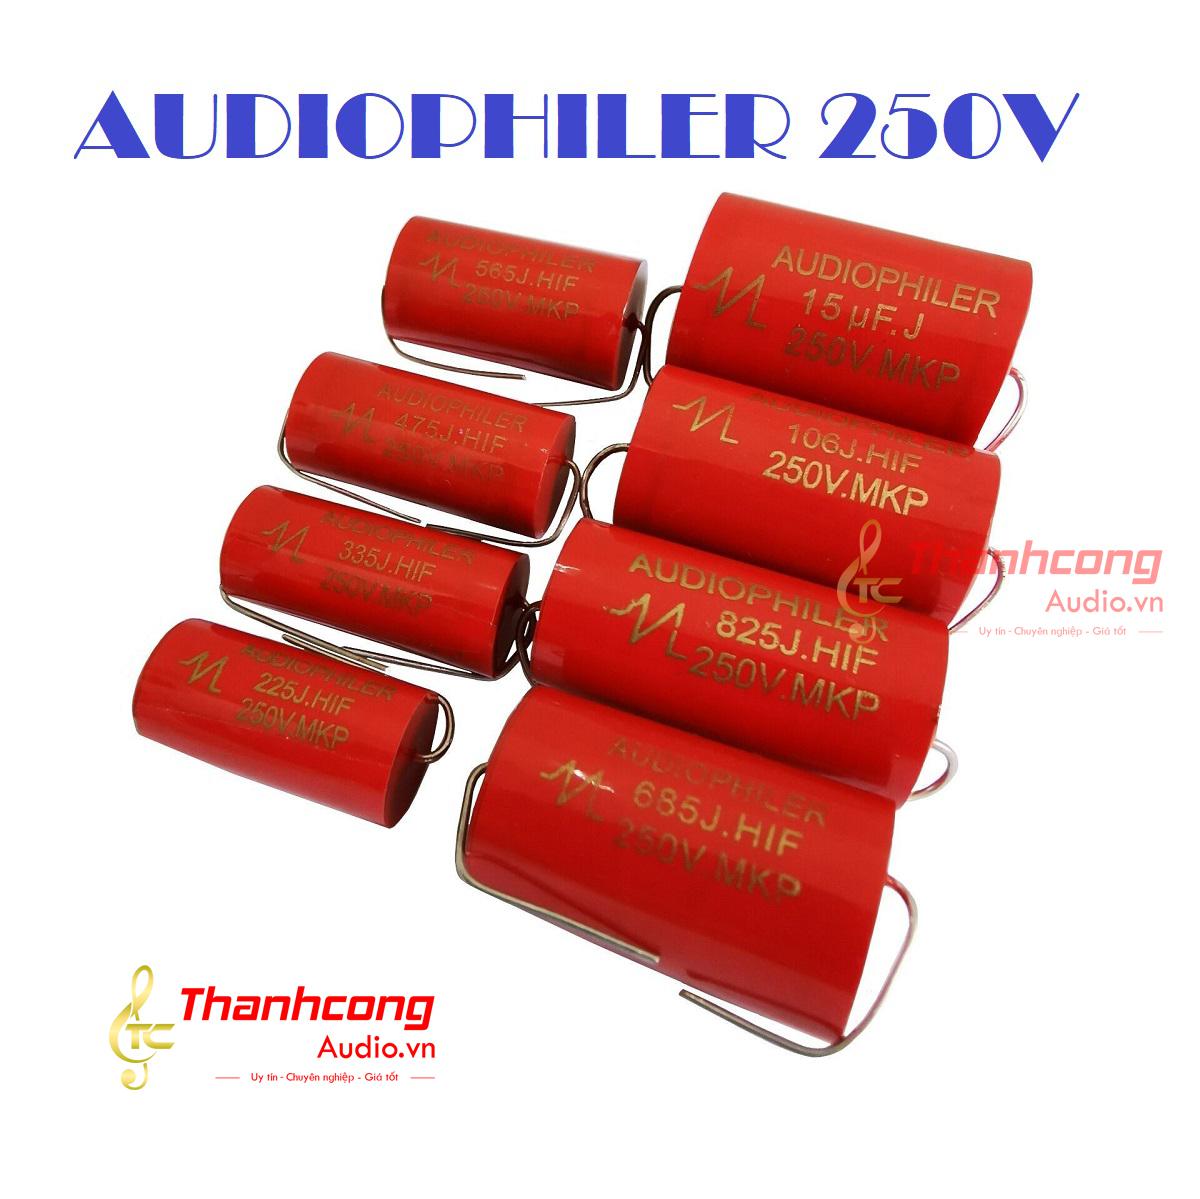 01 tụ đỏ Audio: AudioPhiler 250V 1.5uF-12uF: Chất lượng tốt.